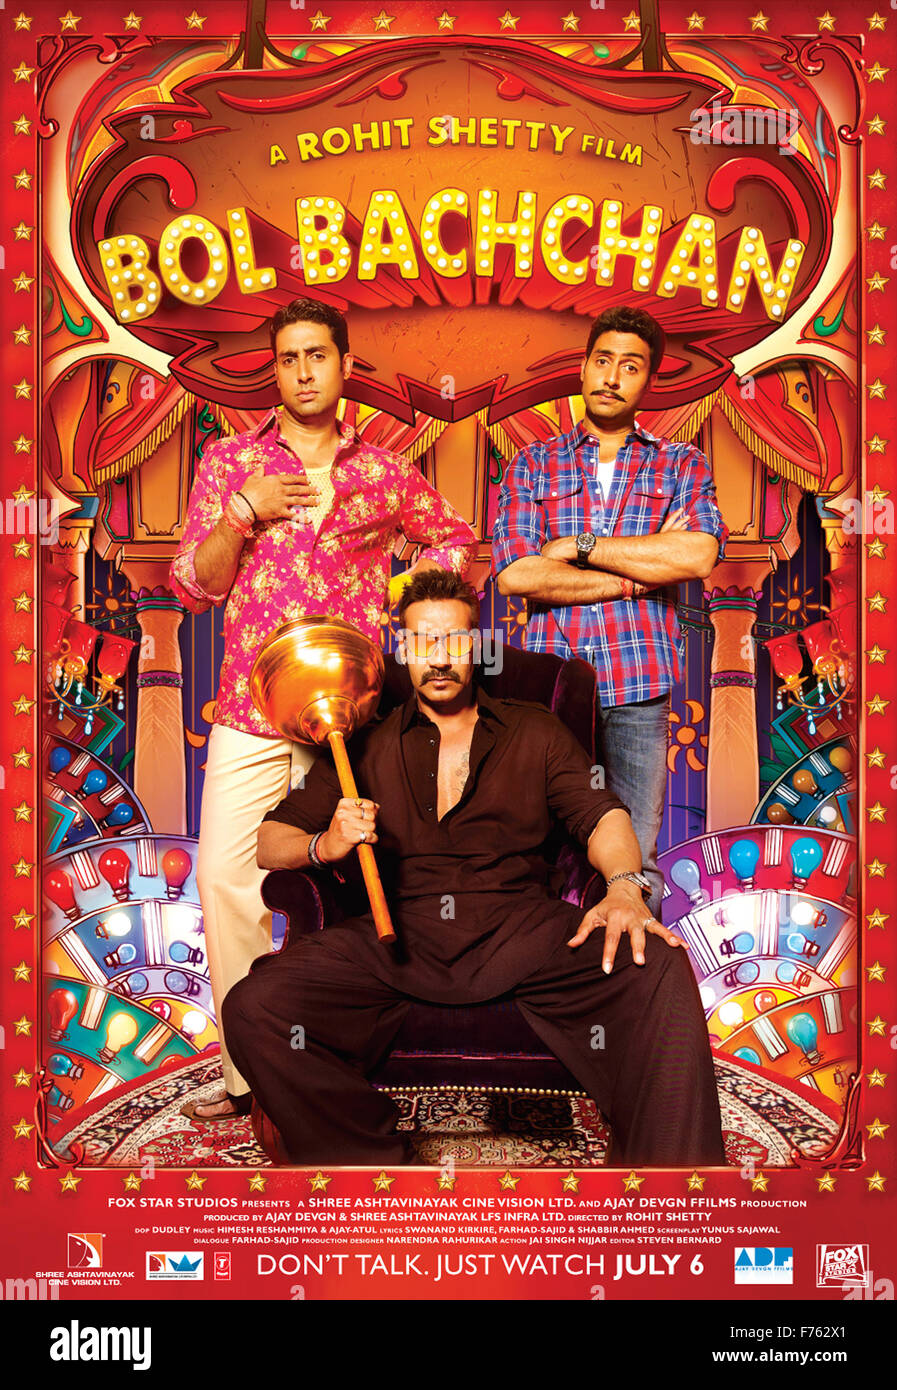 Hindi-Filmplakat von Bol Bachchan, Rohit Shetty Film, Indien, Asien Stockfoto